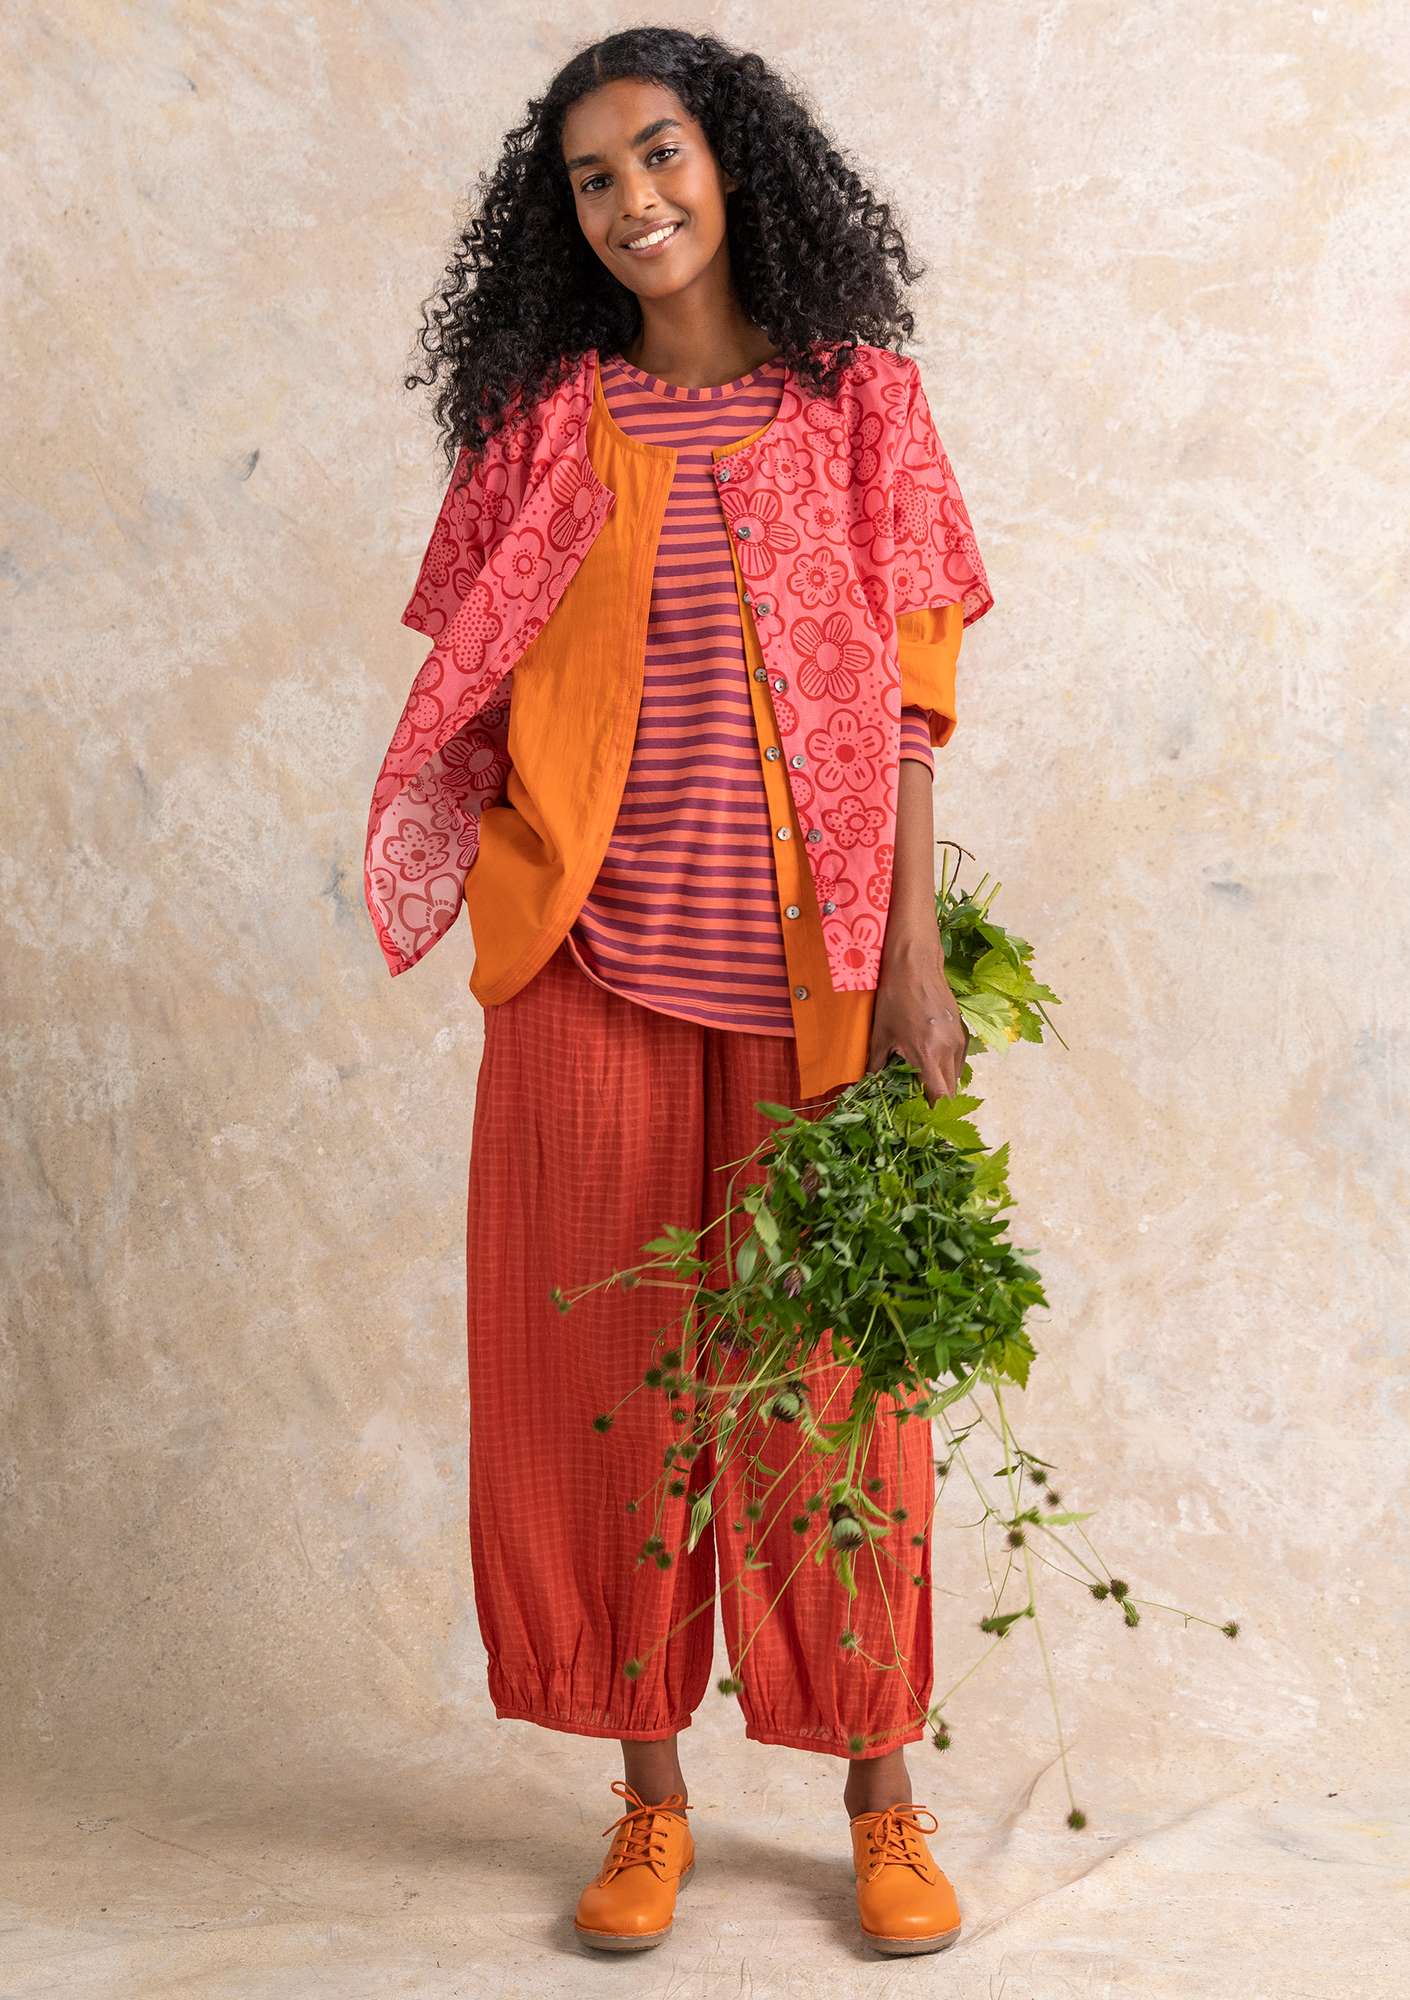 “Zoe” short-sleeved organic cotton blouse flamingo/patterned